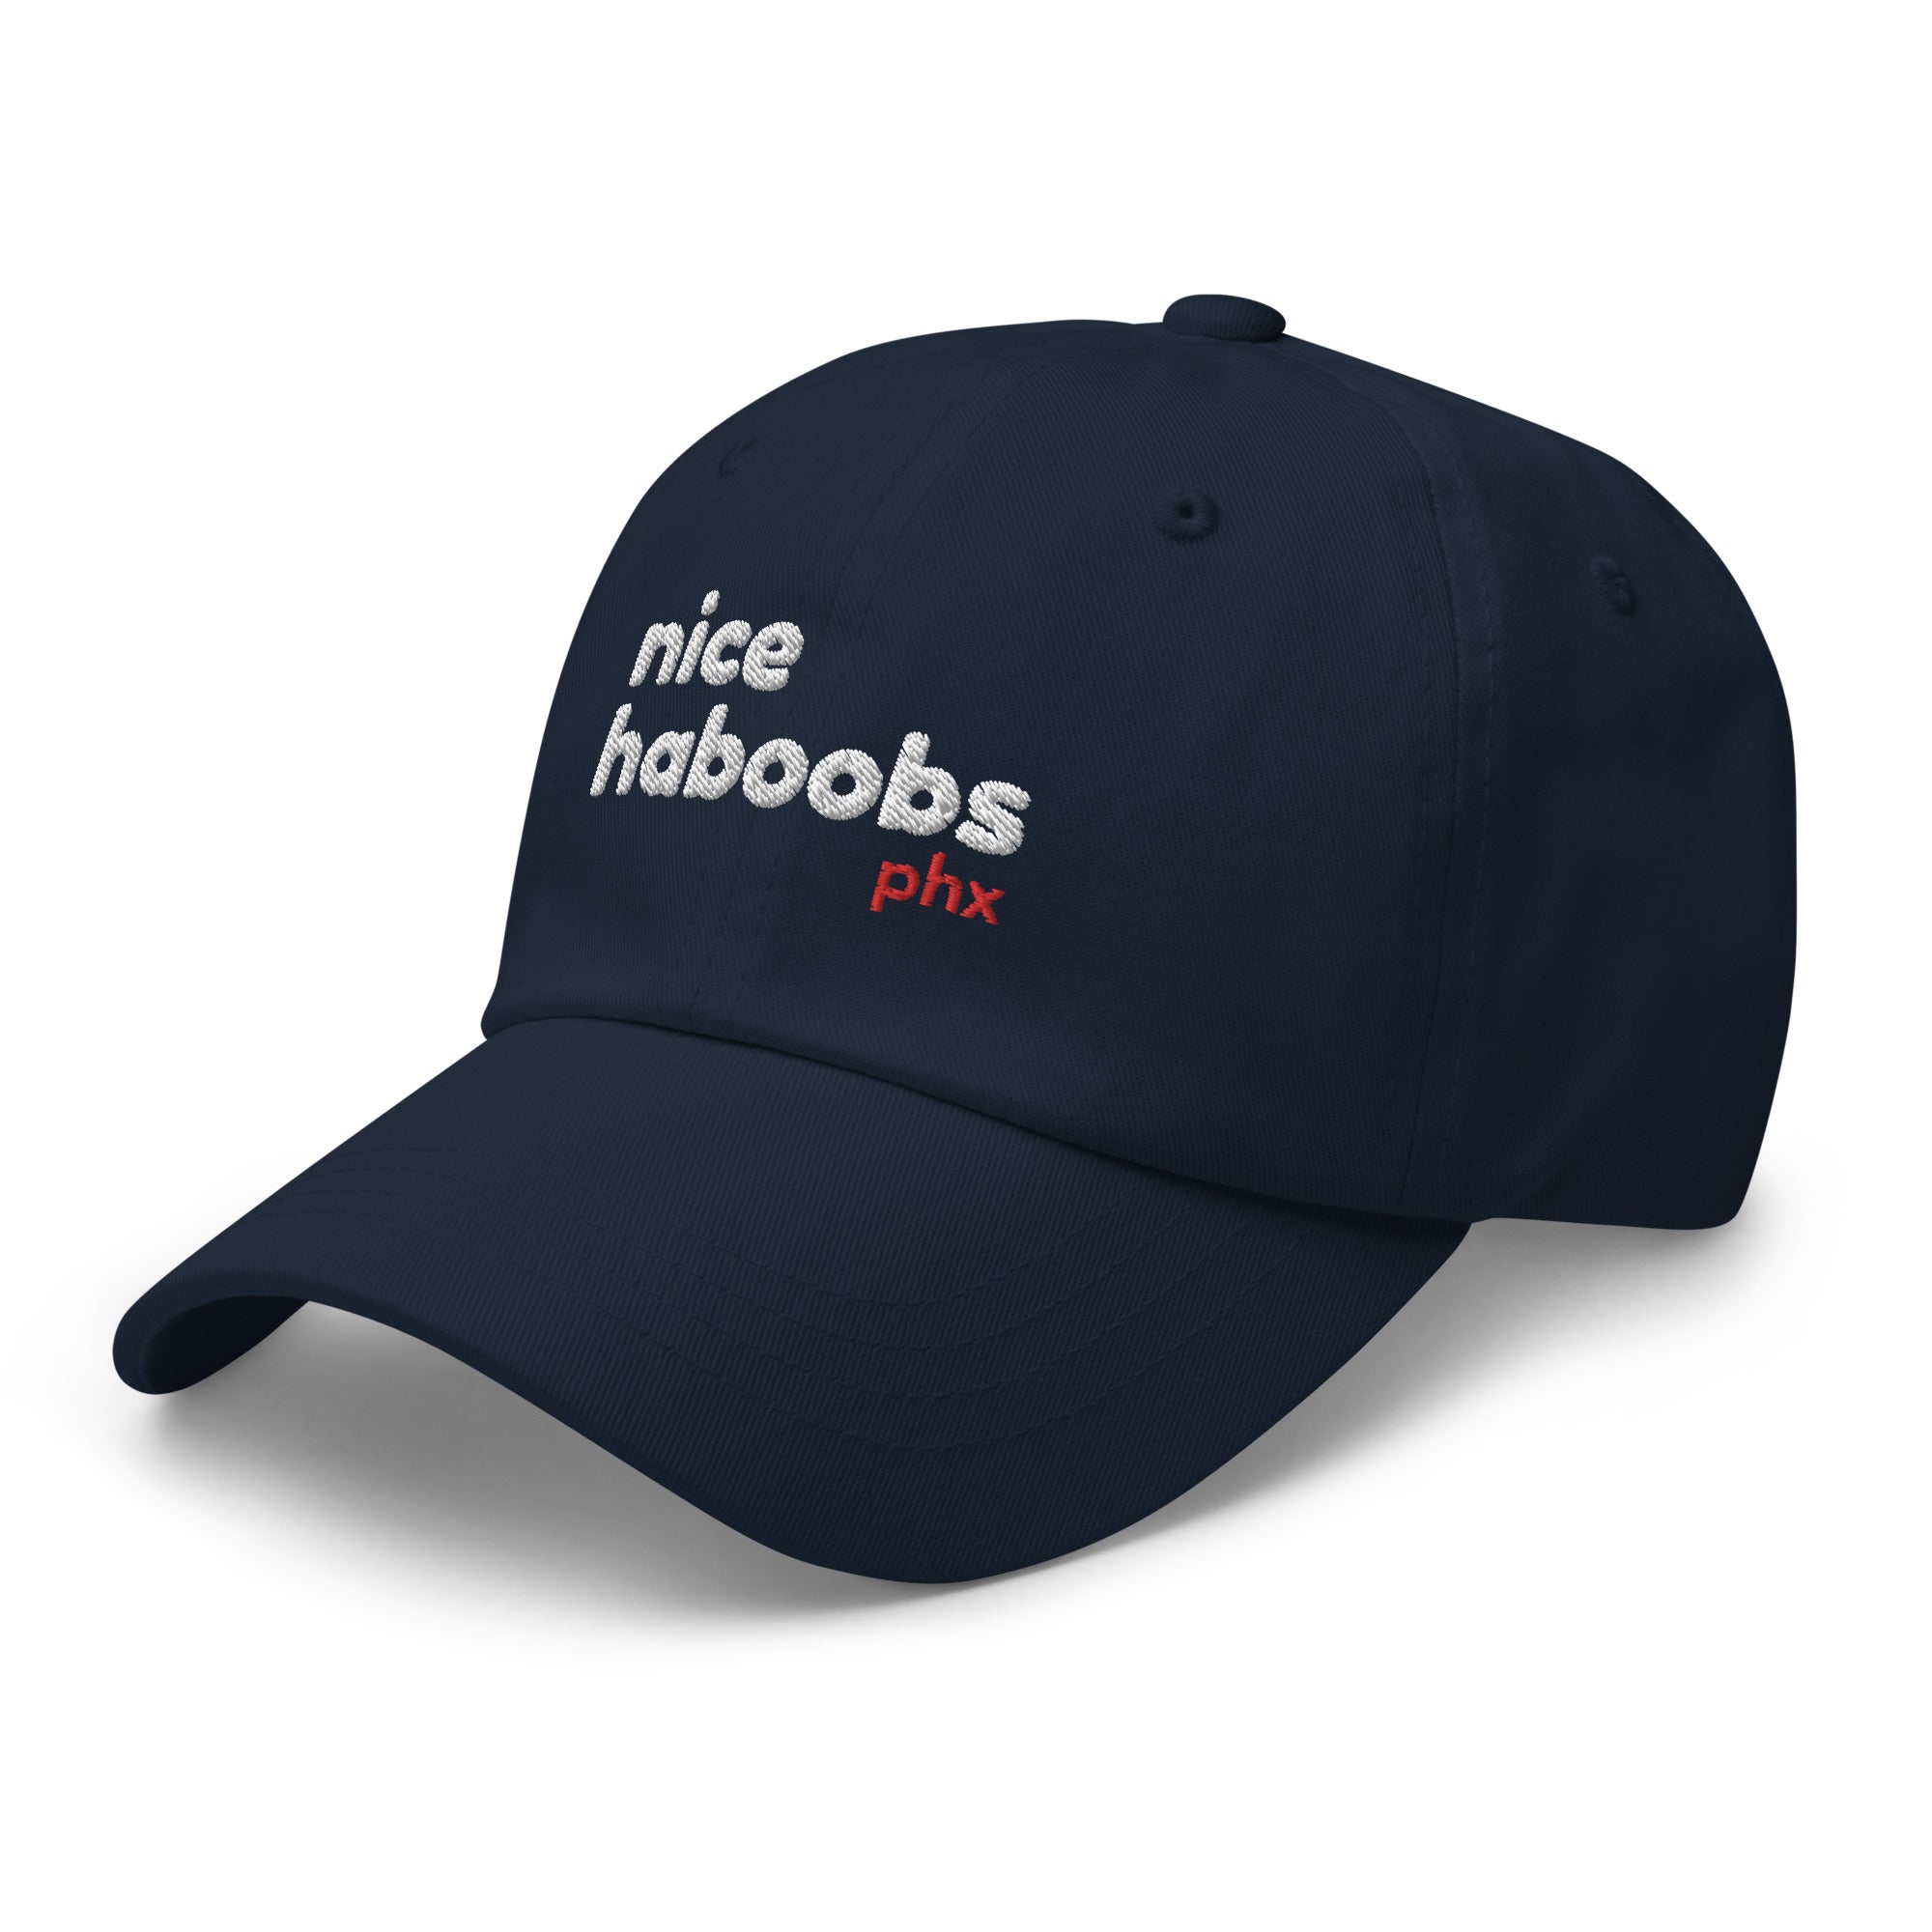 "Nice Haboobs" Classic Dad Hat - Phoenix Slang